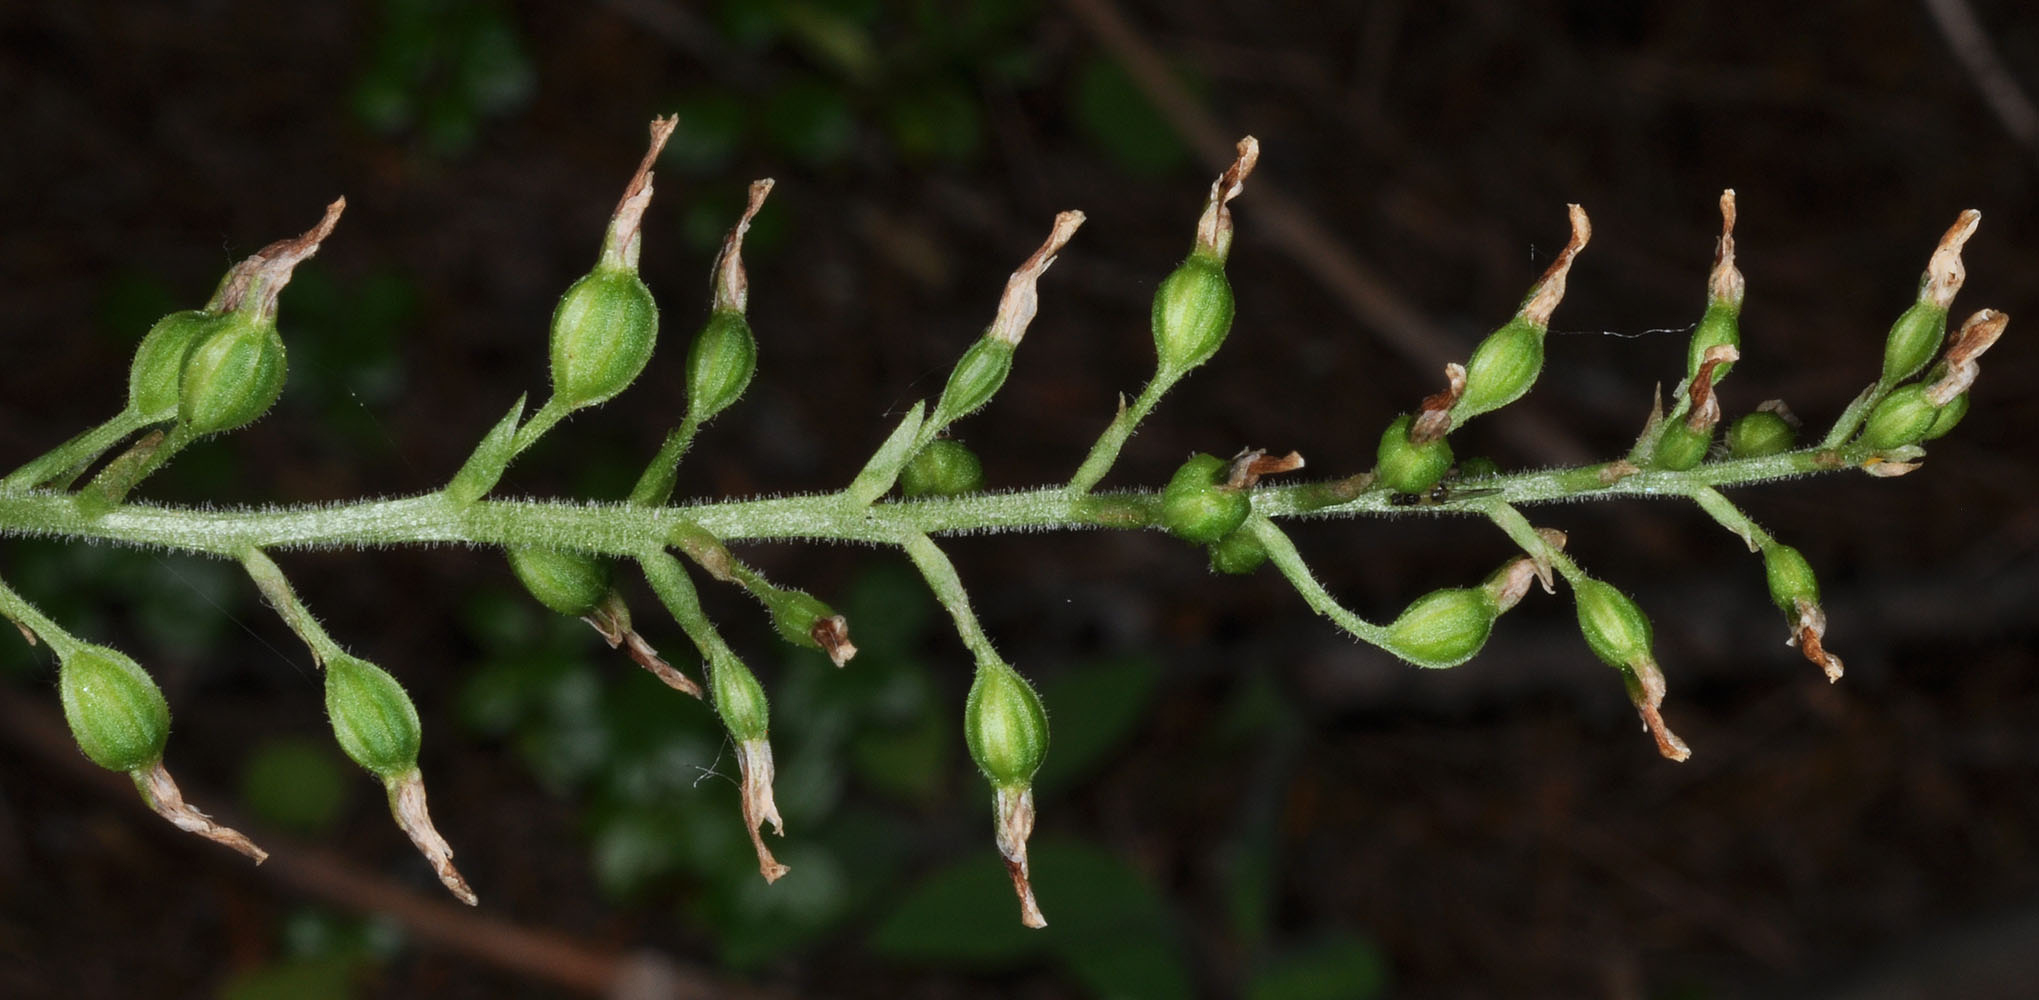 Flora of Eastern Washington Image: Listera sp